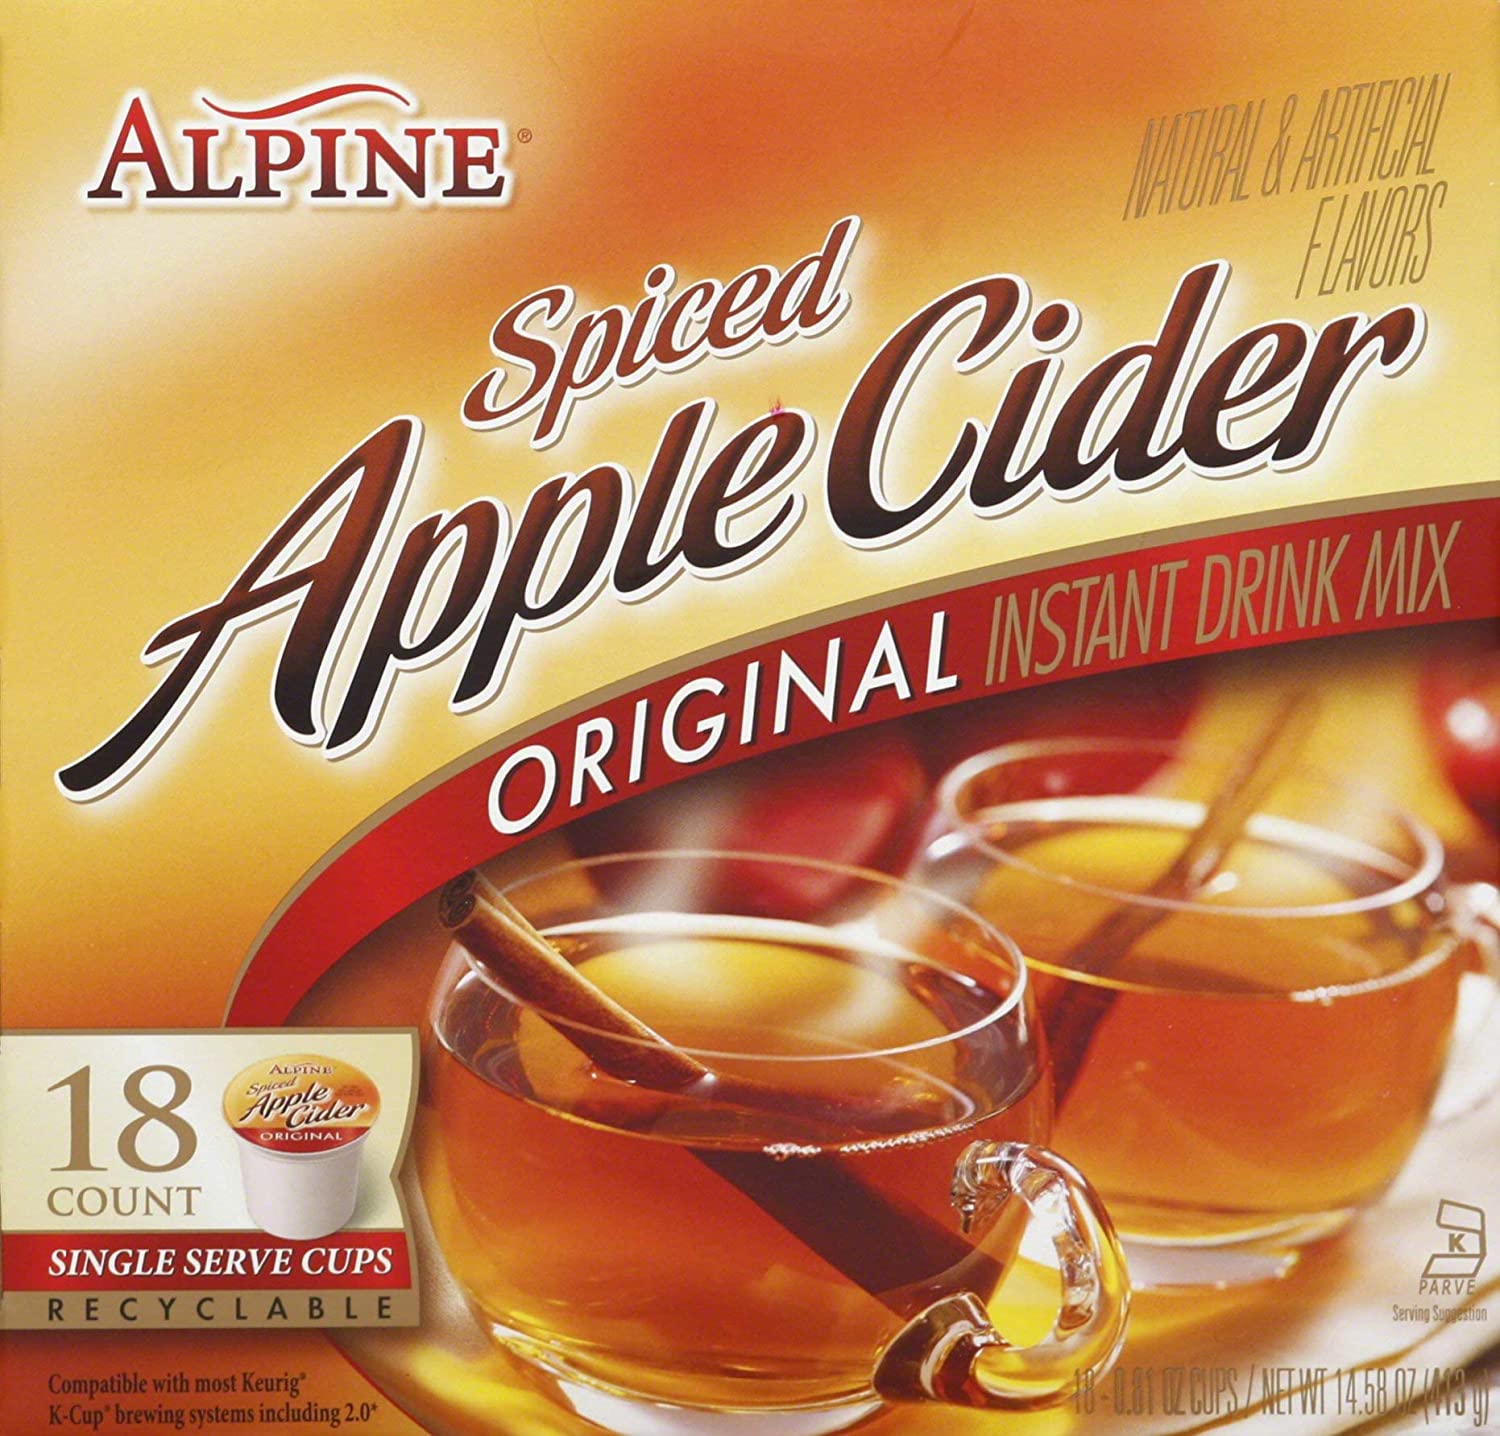 Alpine Original Spiced Apple Cider keurig coffee pods